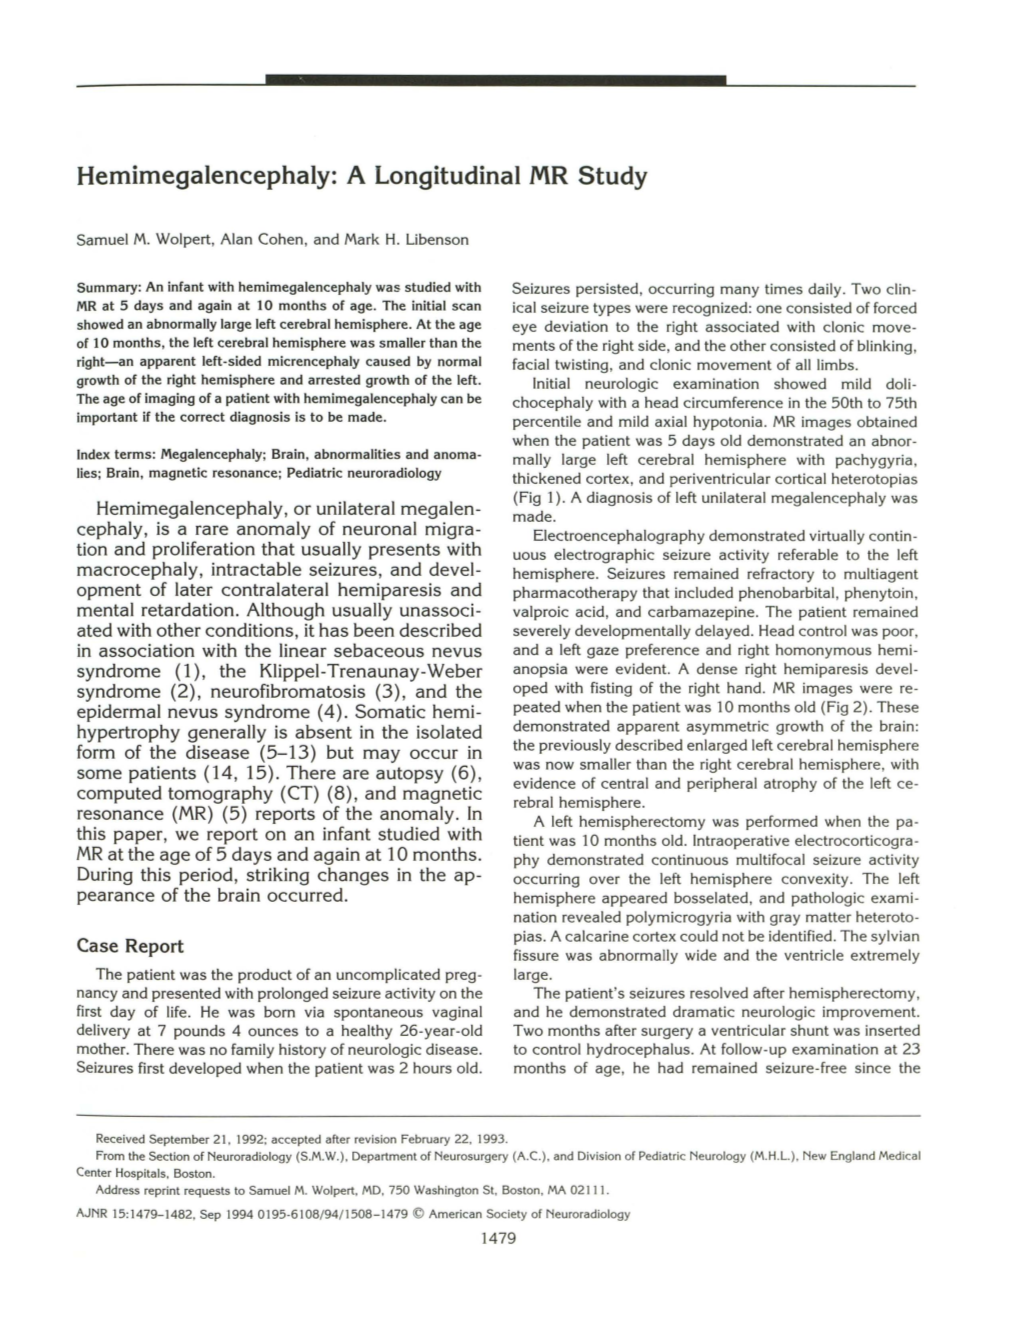 Hemimegalencephaly: a Longitudinal MR Study